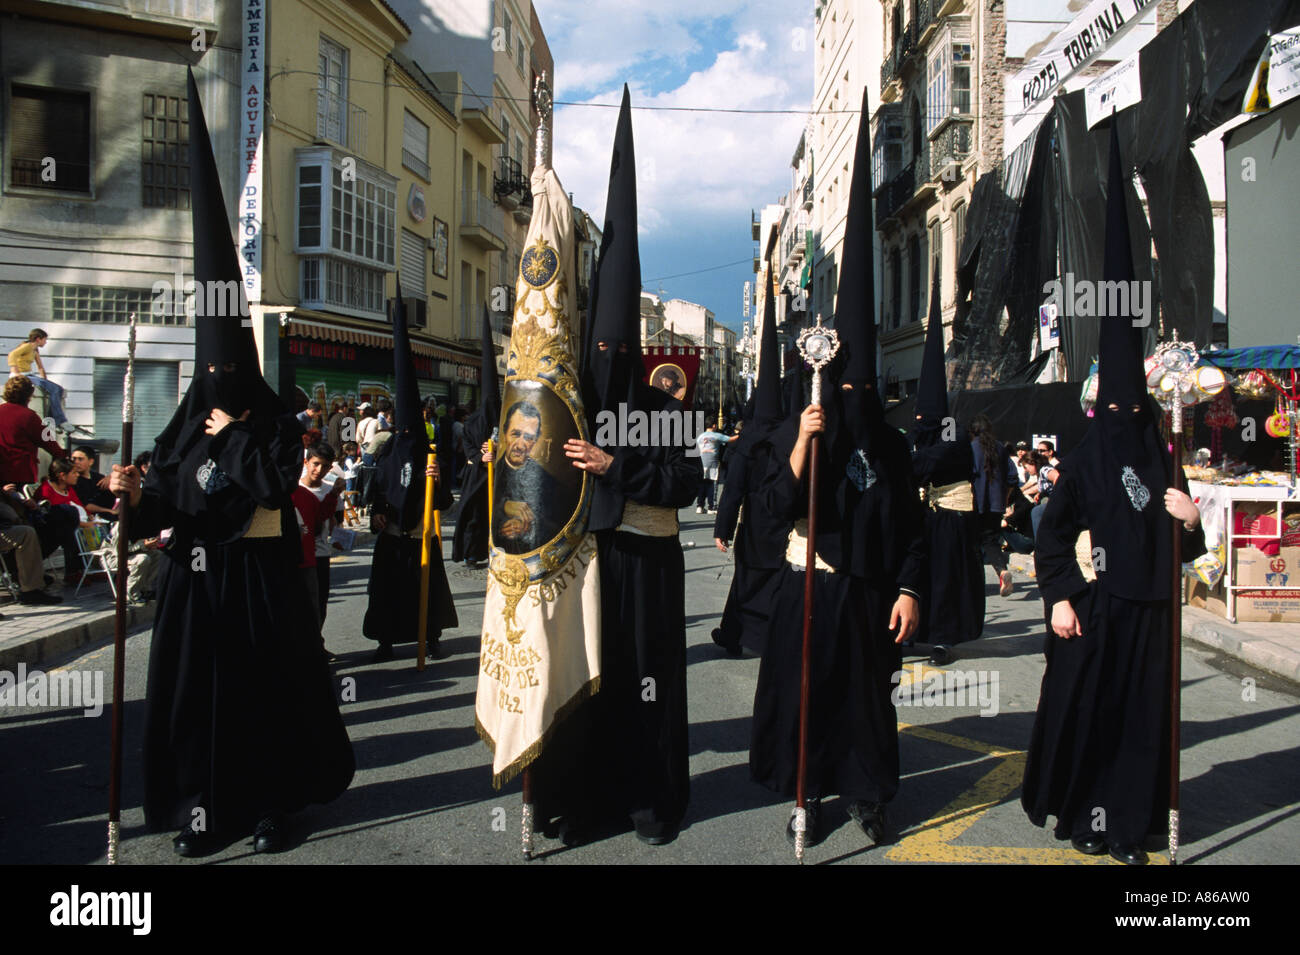 Easter procession in Spain men in black walking in a street Stock Photo